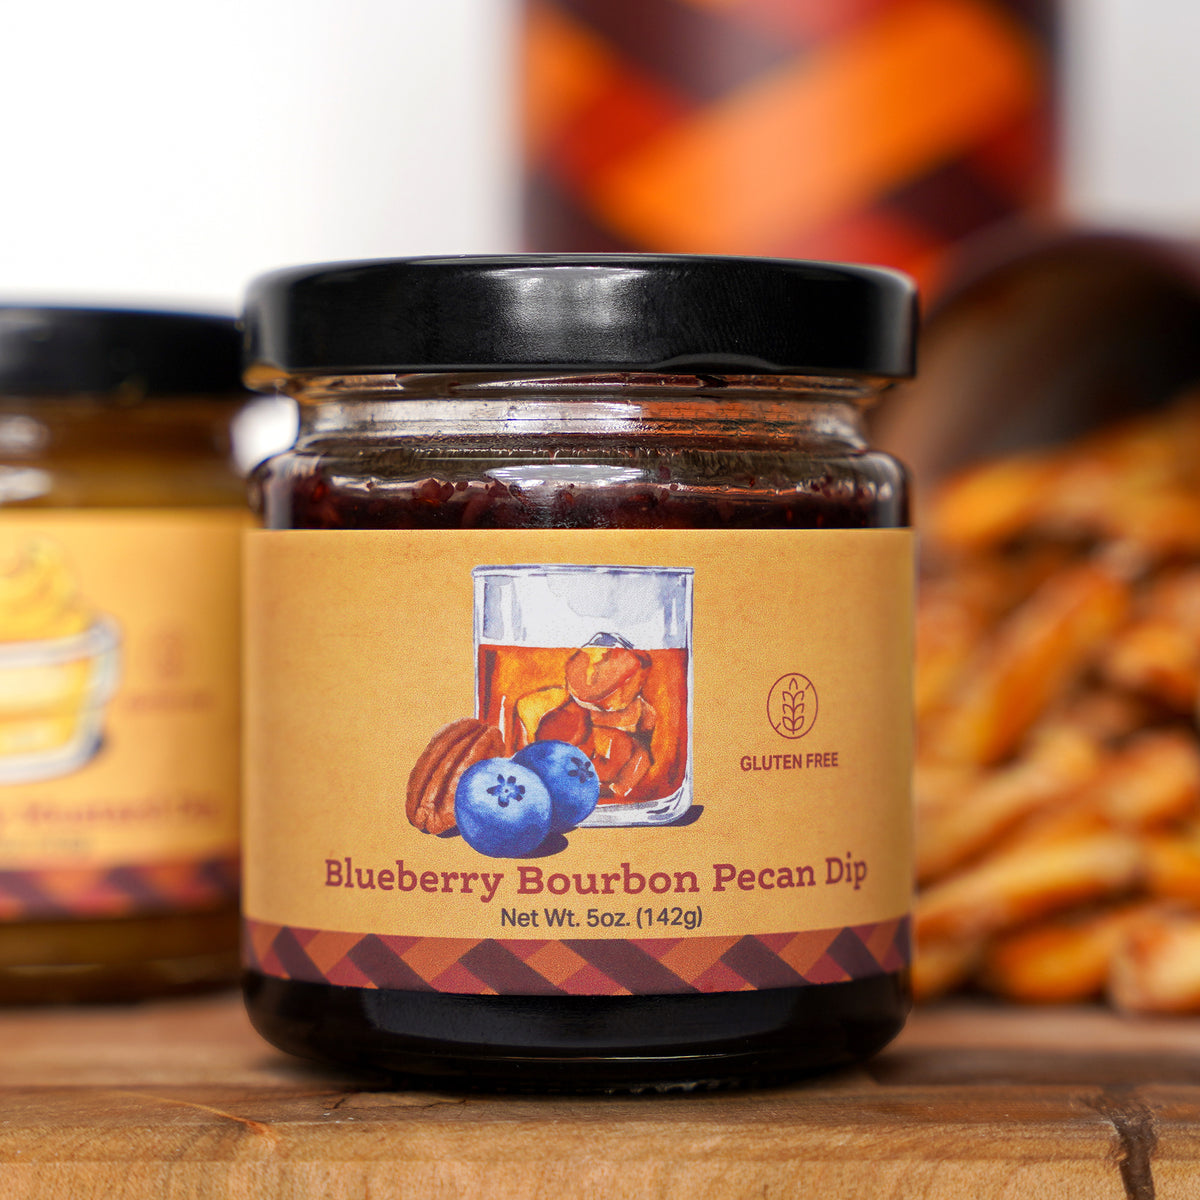 Blueberry Bourbon Pecan & Pecan Honey Mustard Artisanal Dips